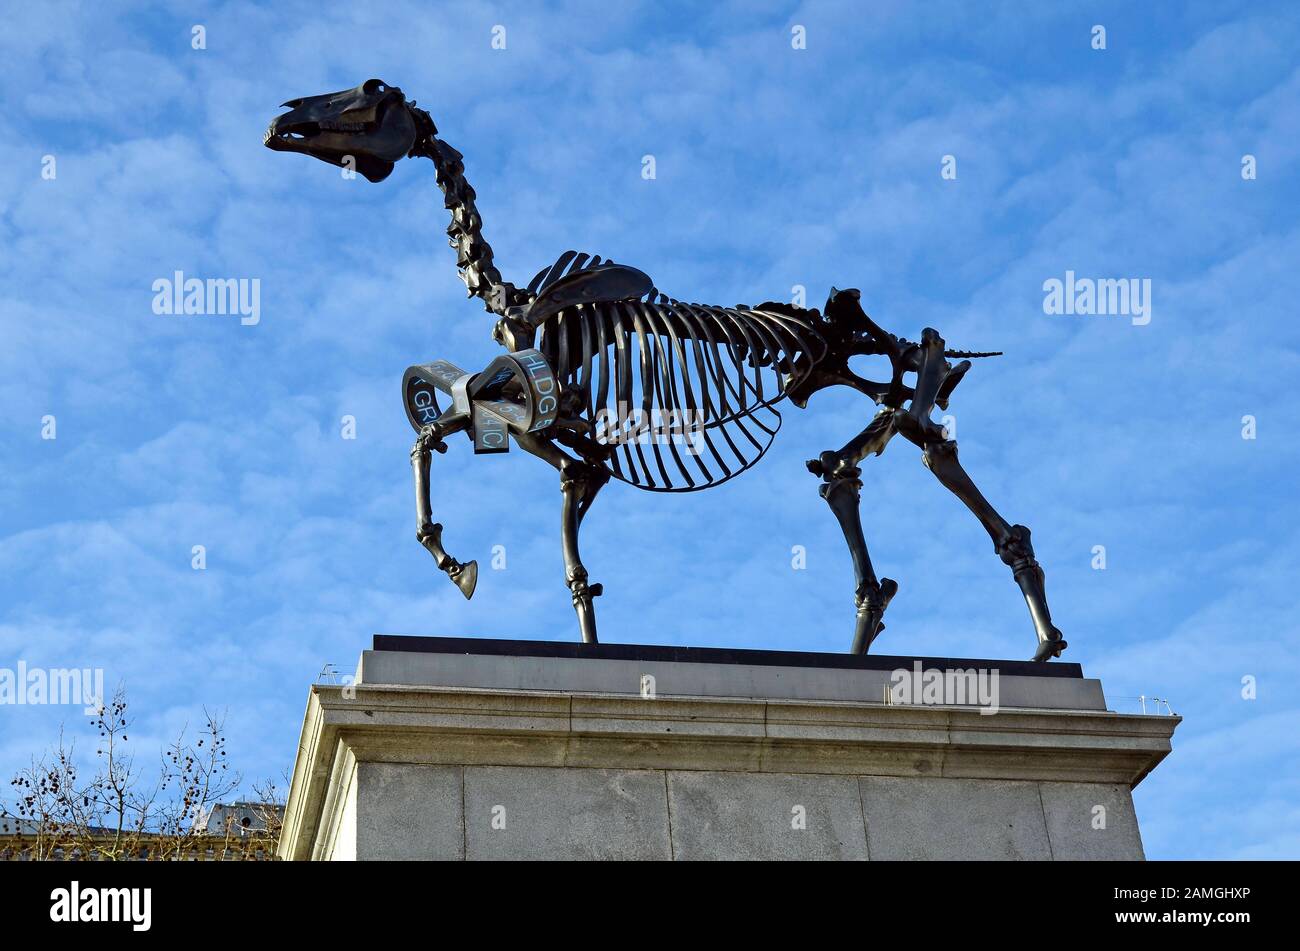 London, Großbritannien - 19. Januar 2016: Moderne Skulptur auf der vierten Sockelplatte, randloses Pferdeskelett des Künstlers Hans Haacke auf dem Trafalgar Square Stockfoto